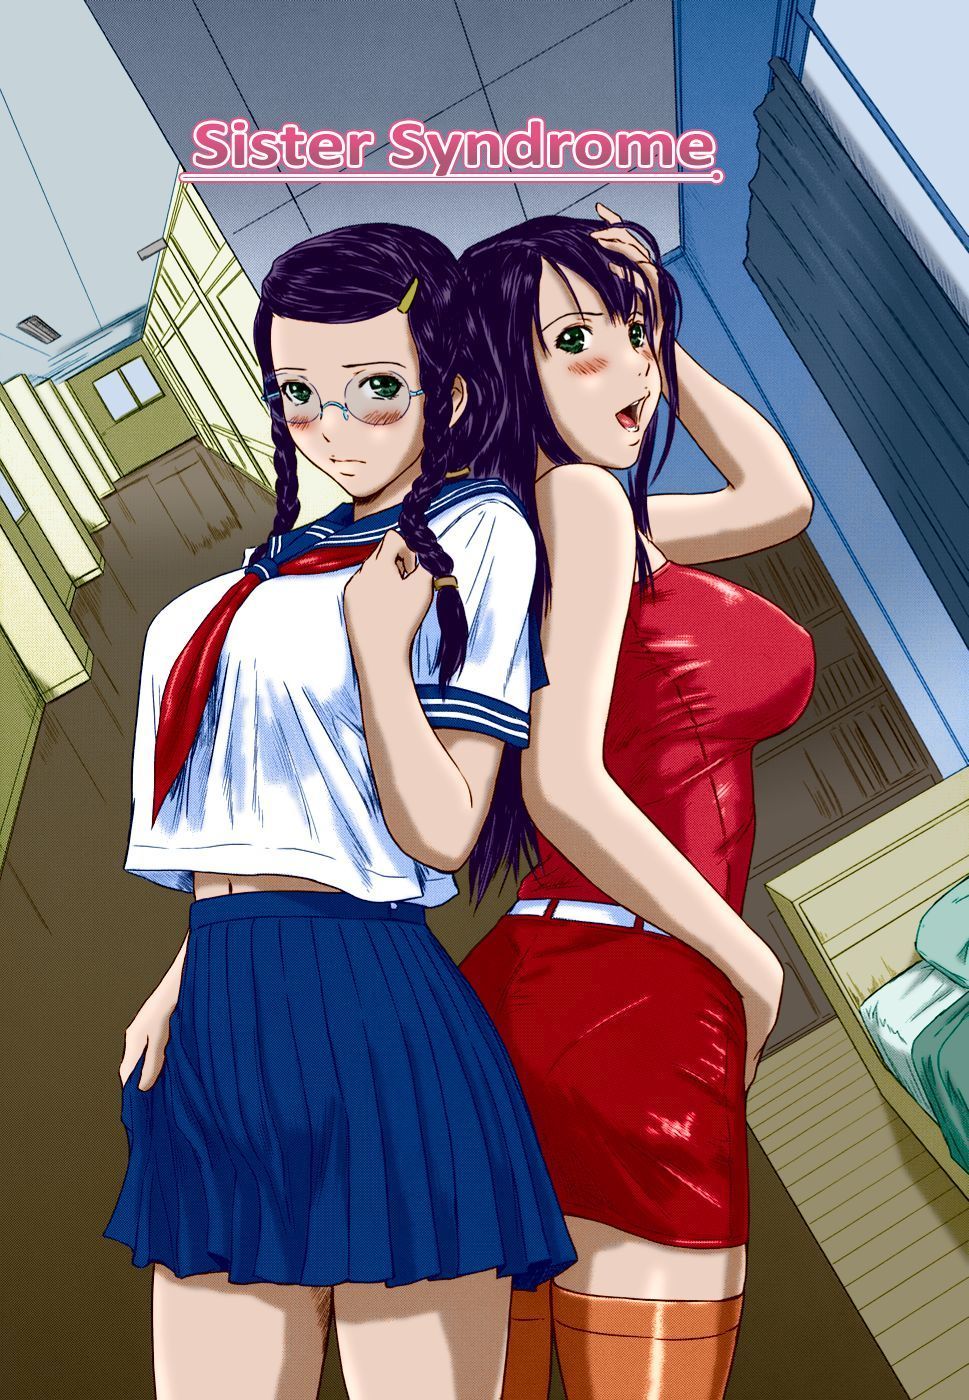 Kisaragi japan. kgm น้องสาว โรคหลง (love selection) colorized decensored